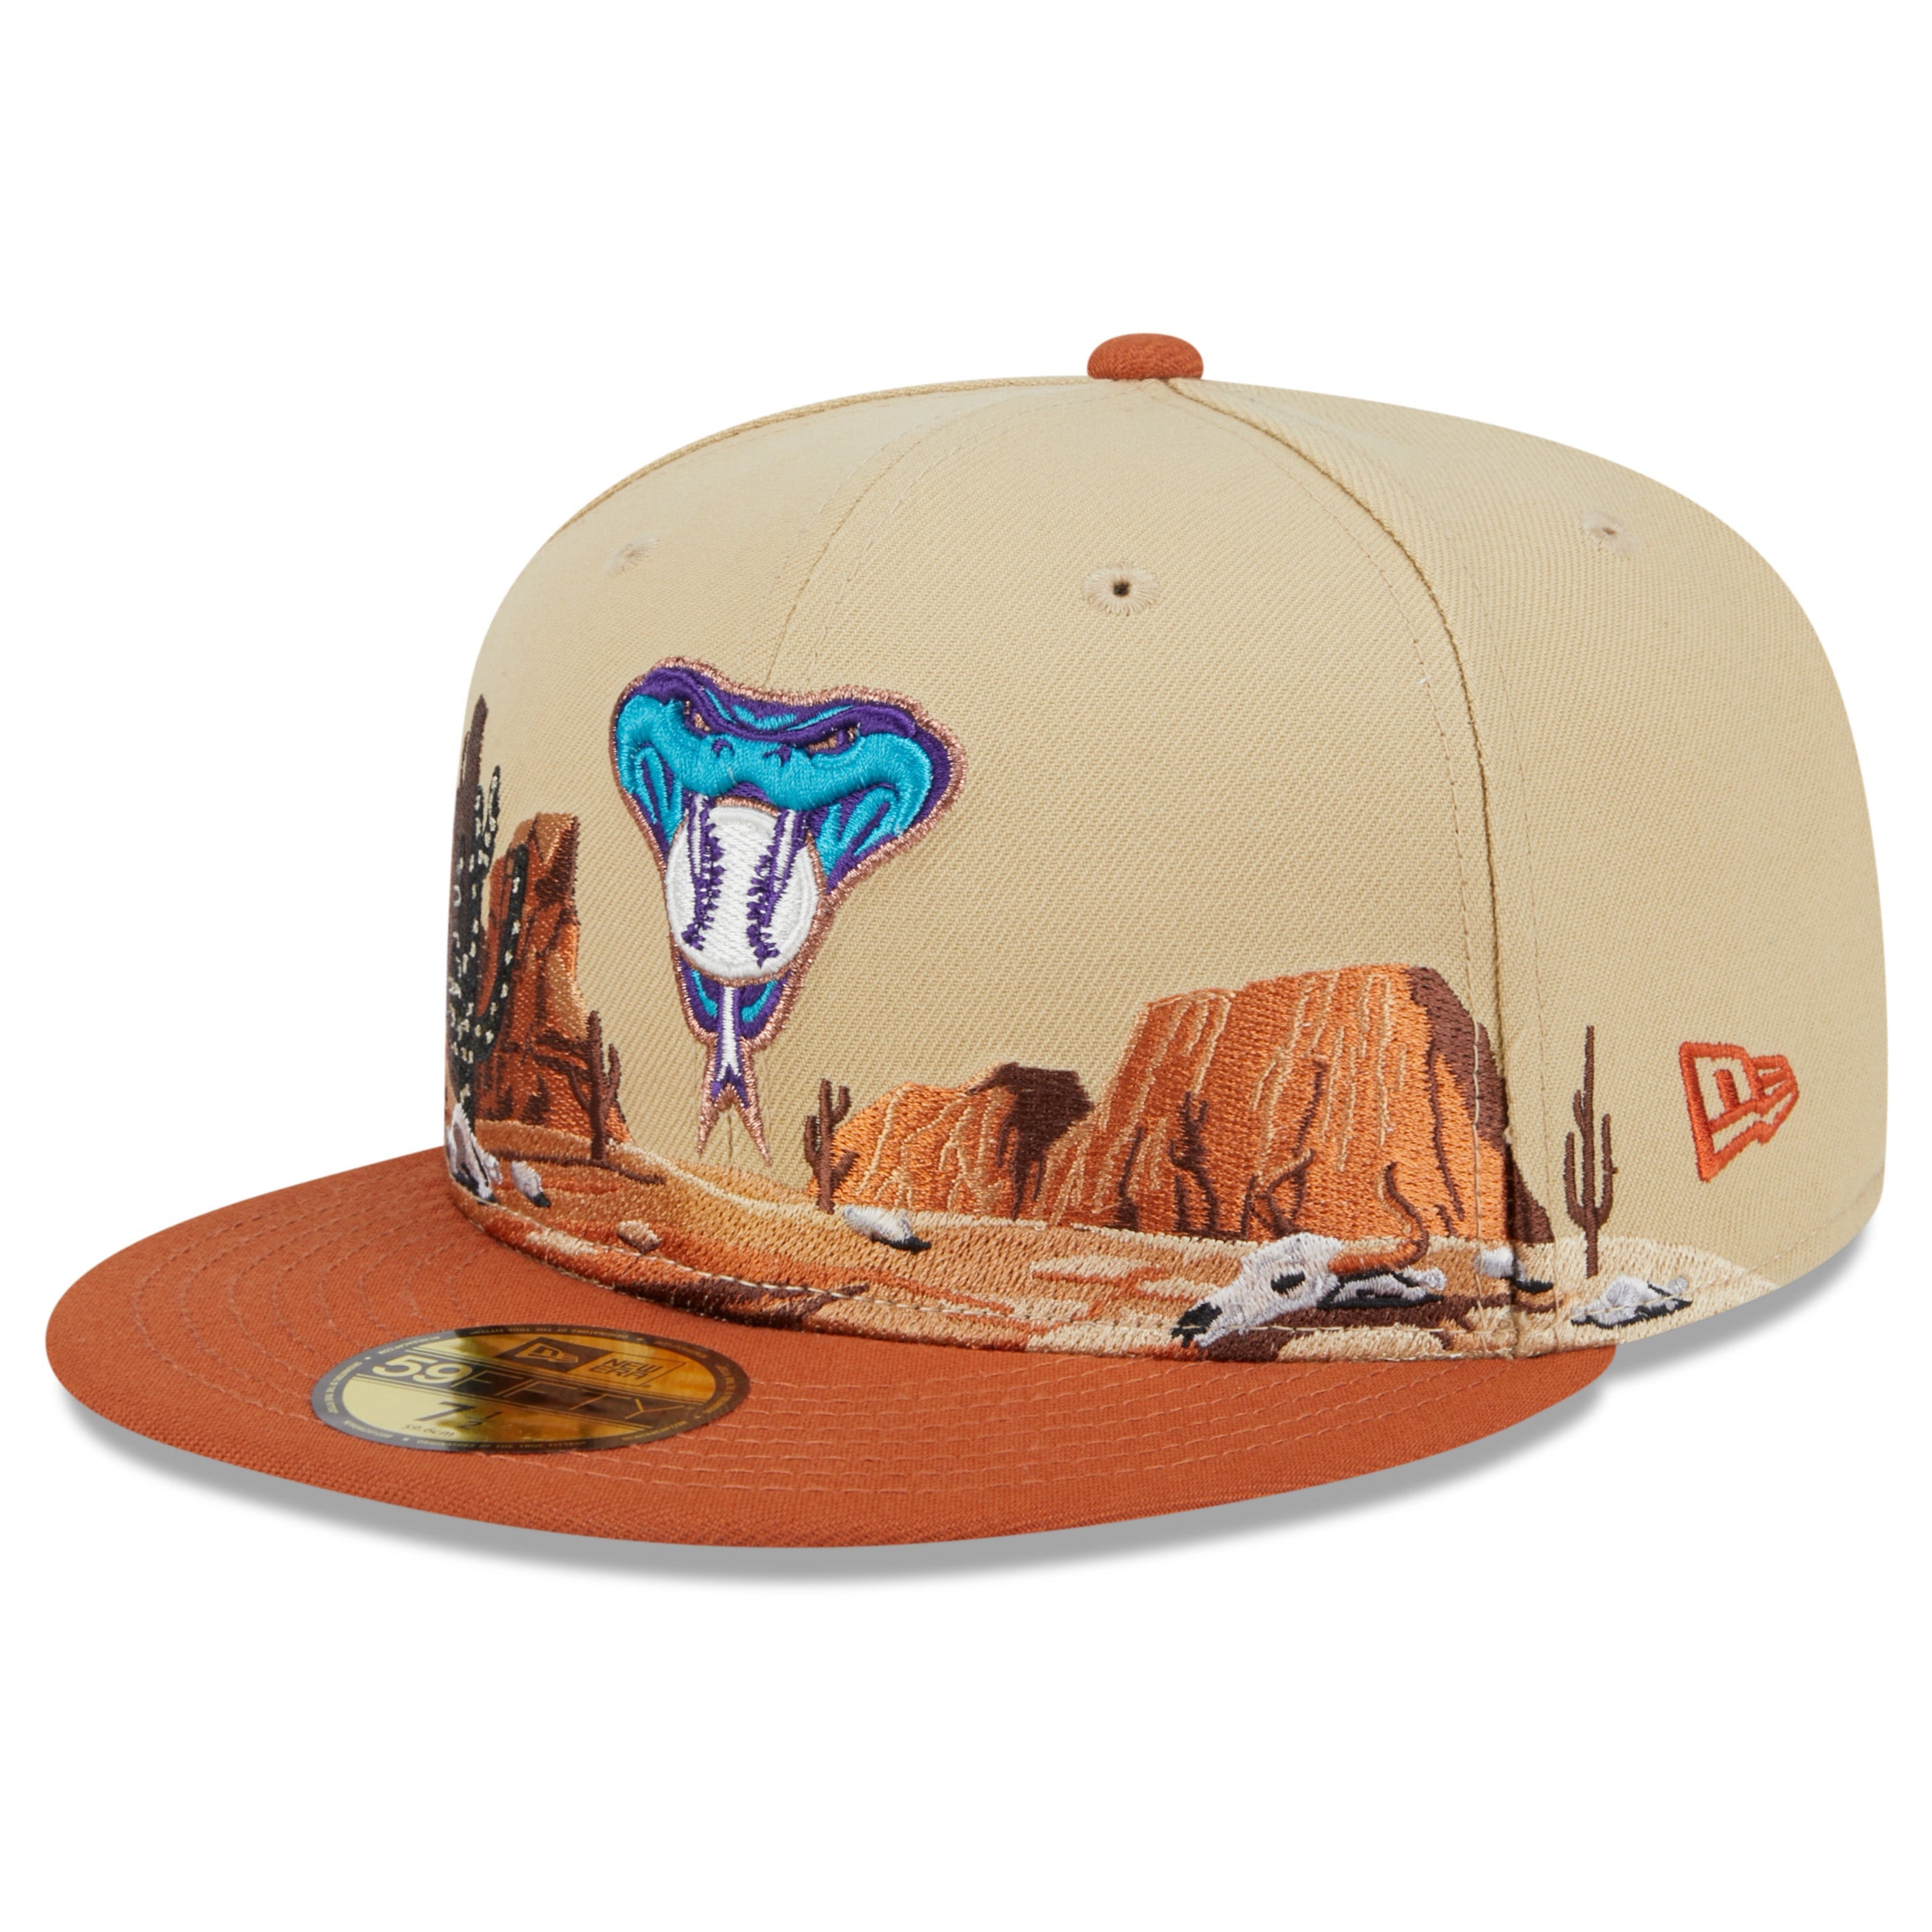 NEW ERA 59FIFTY MLB ARIZONA DIAMONDBACKS TEAM LANDSCAPE TWO TONE / GREY UV FITTED CAP